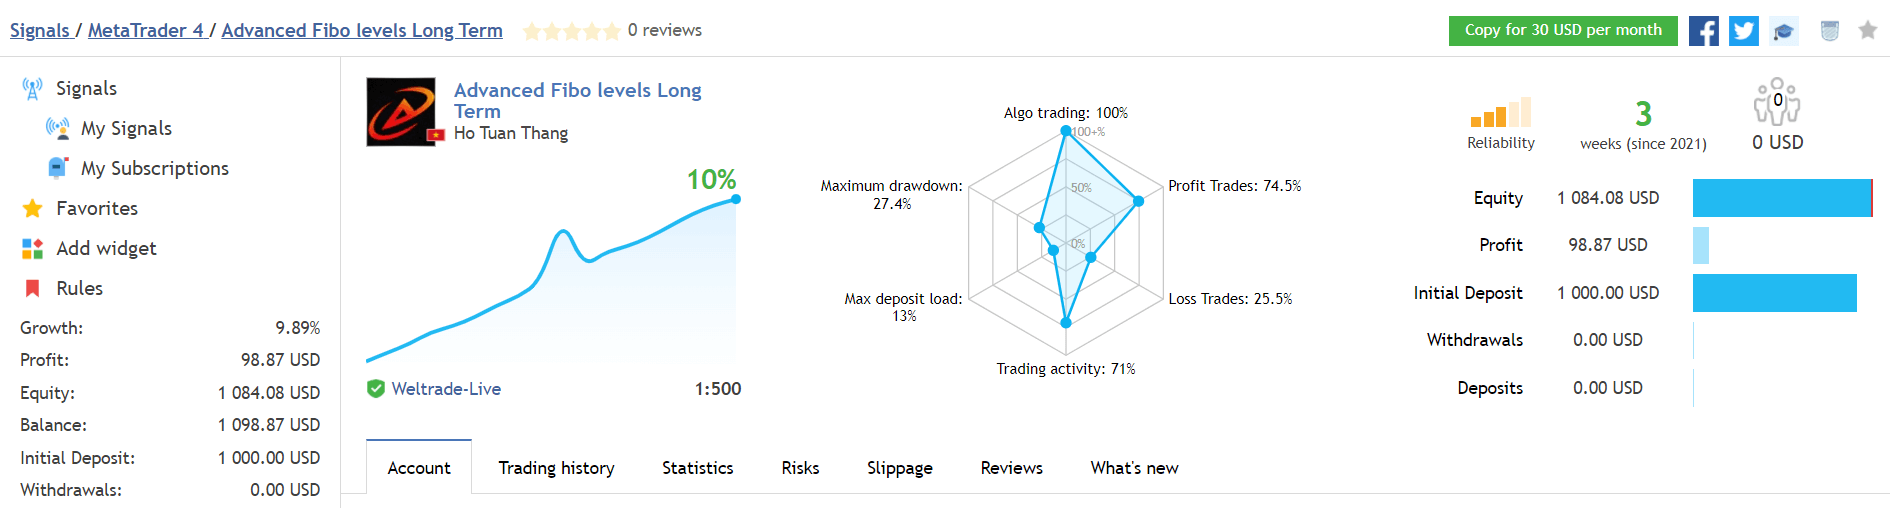 Advanced Fibo Levels trading results